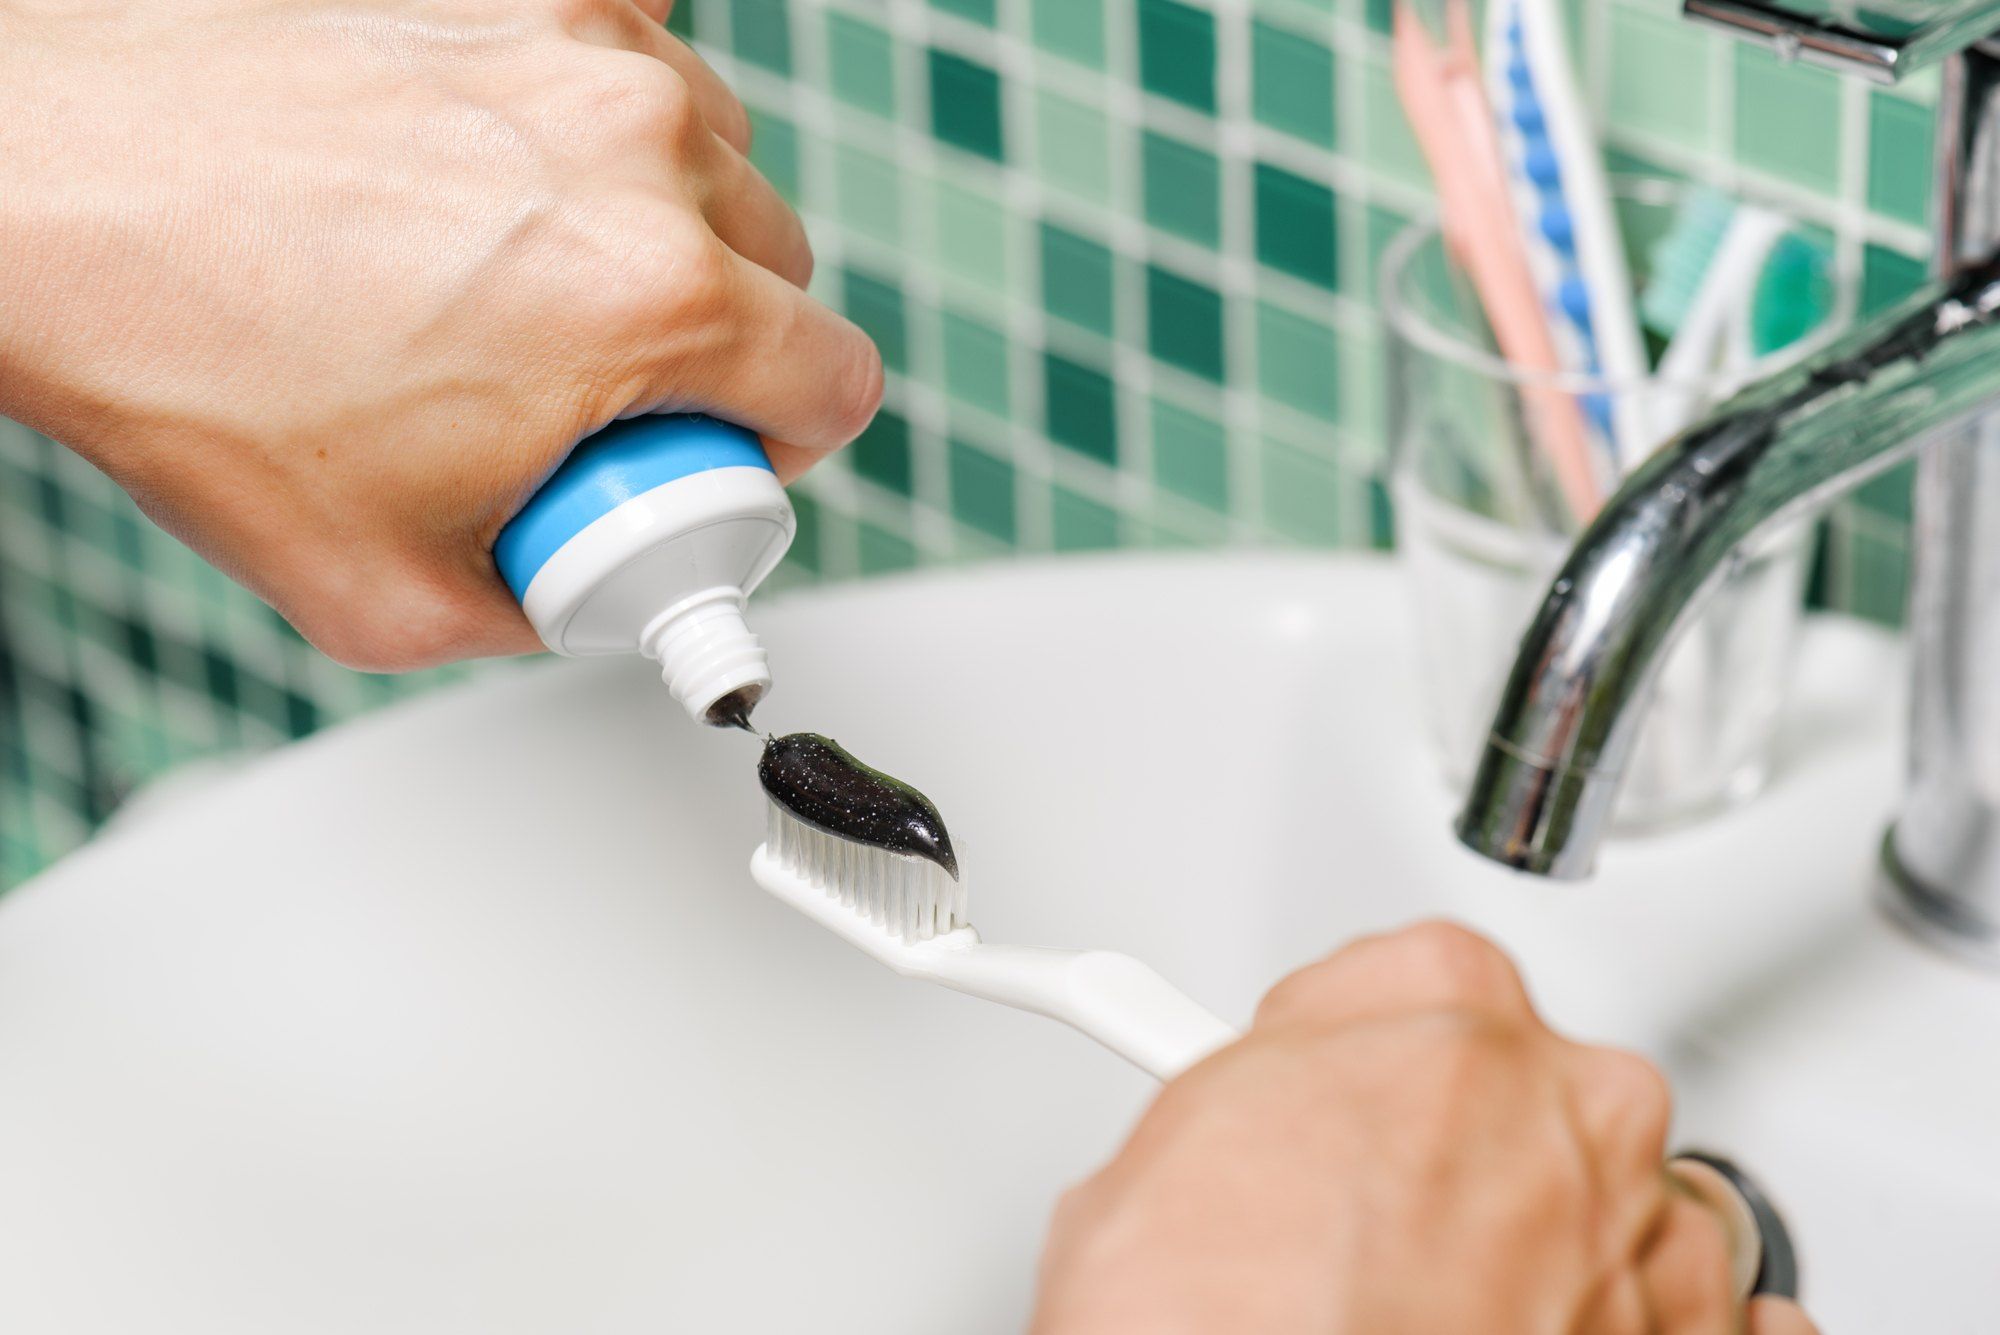 Crest charcoal toothpaste is facing a class action lawsuit alleging it is hazardous. 